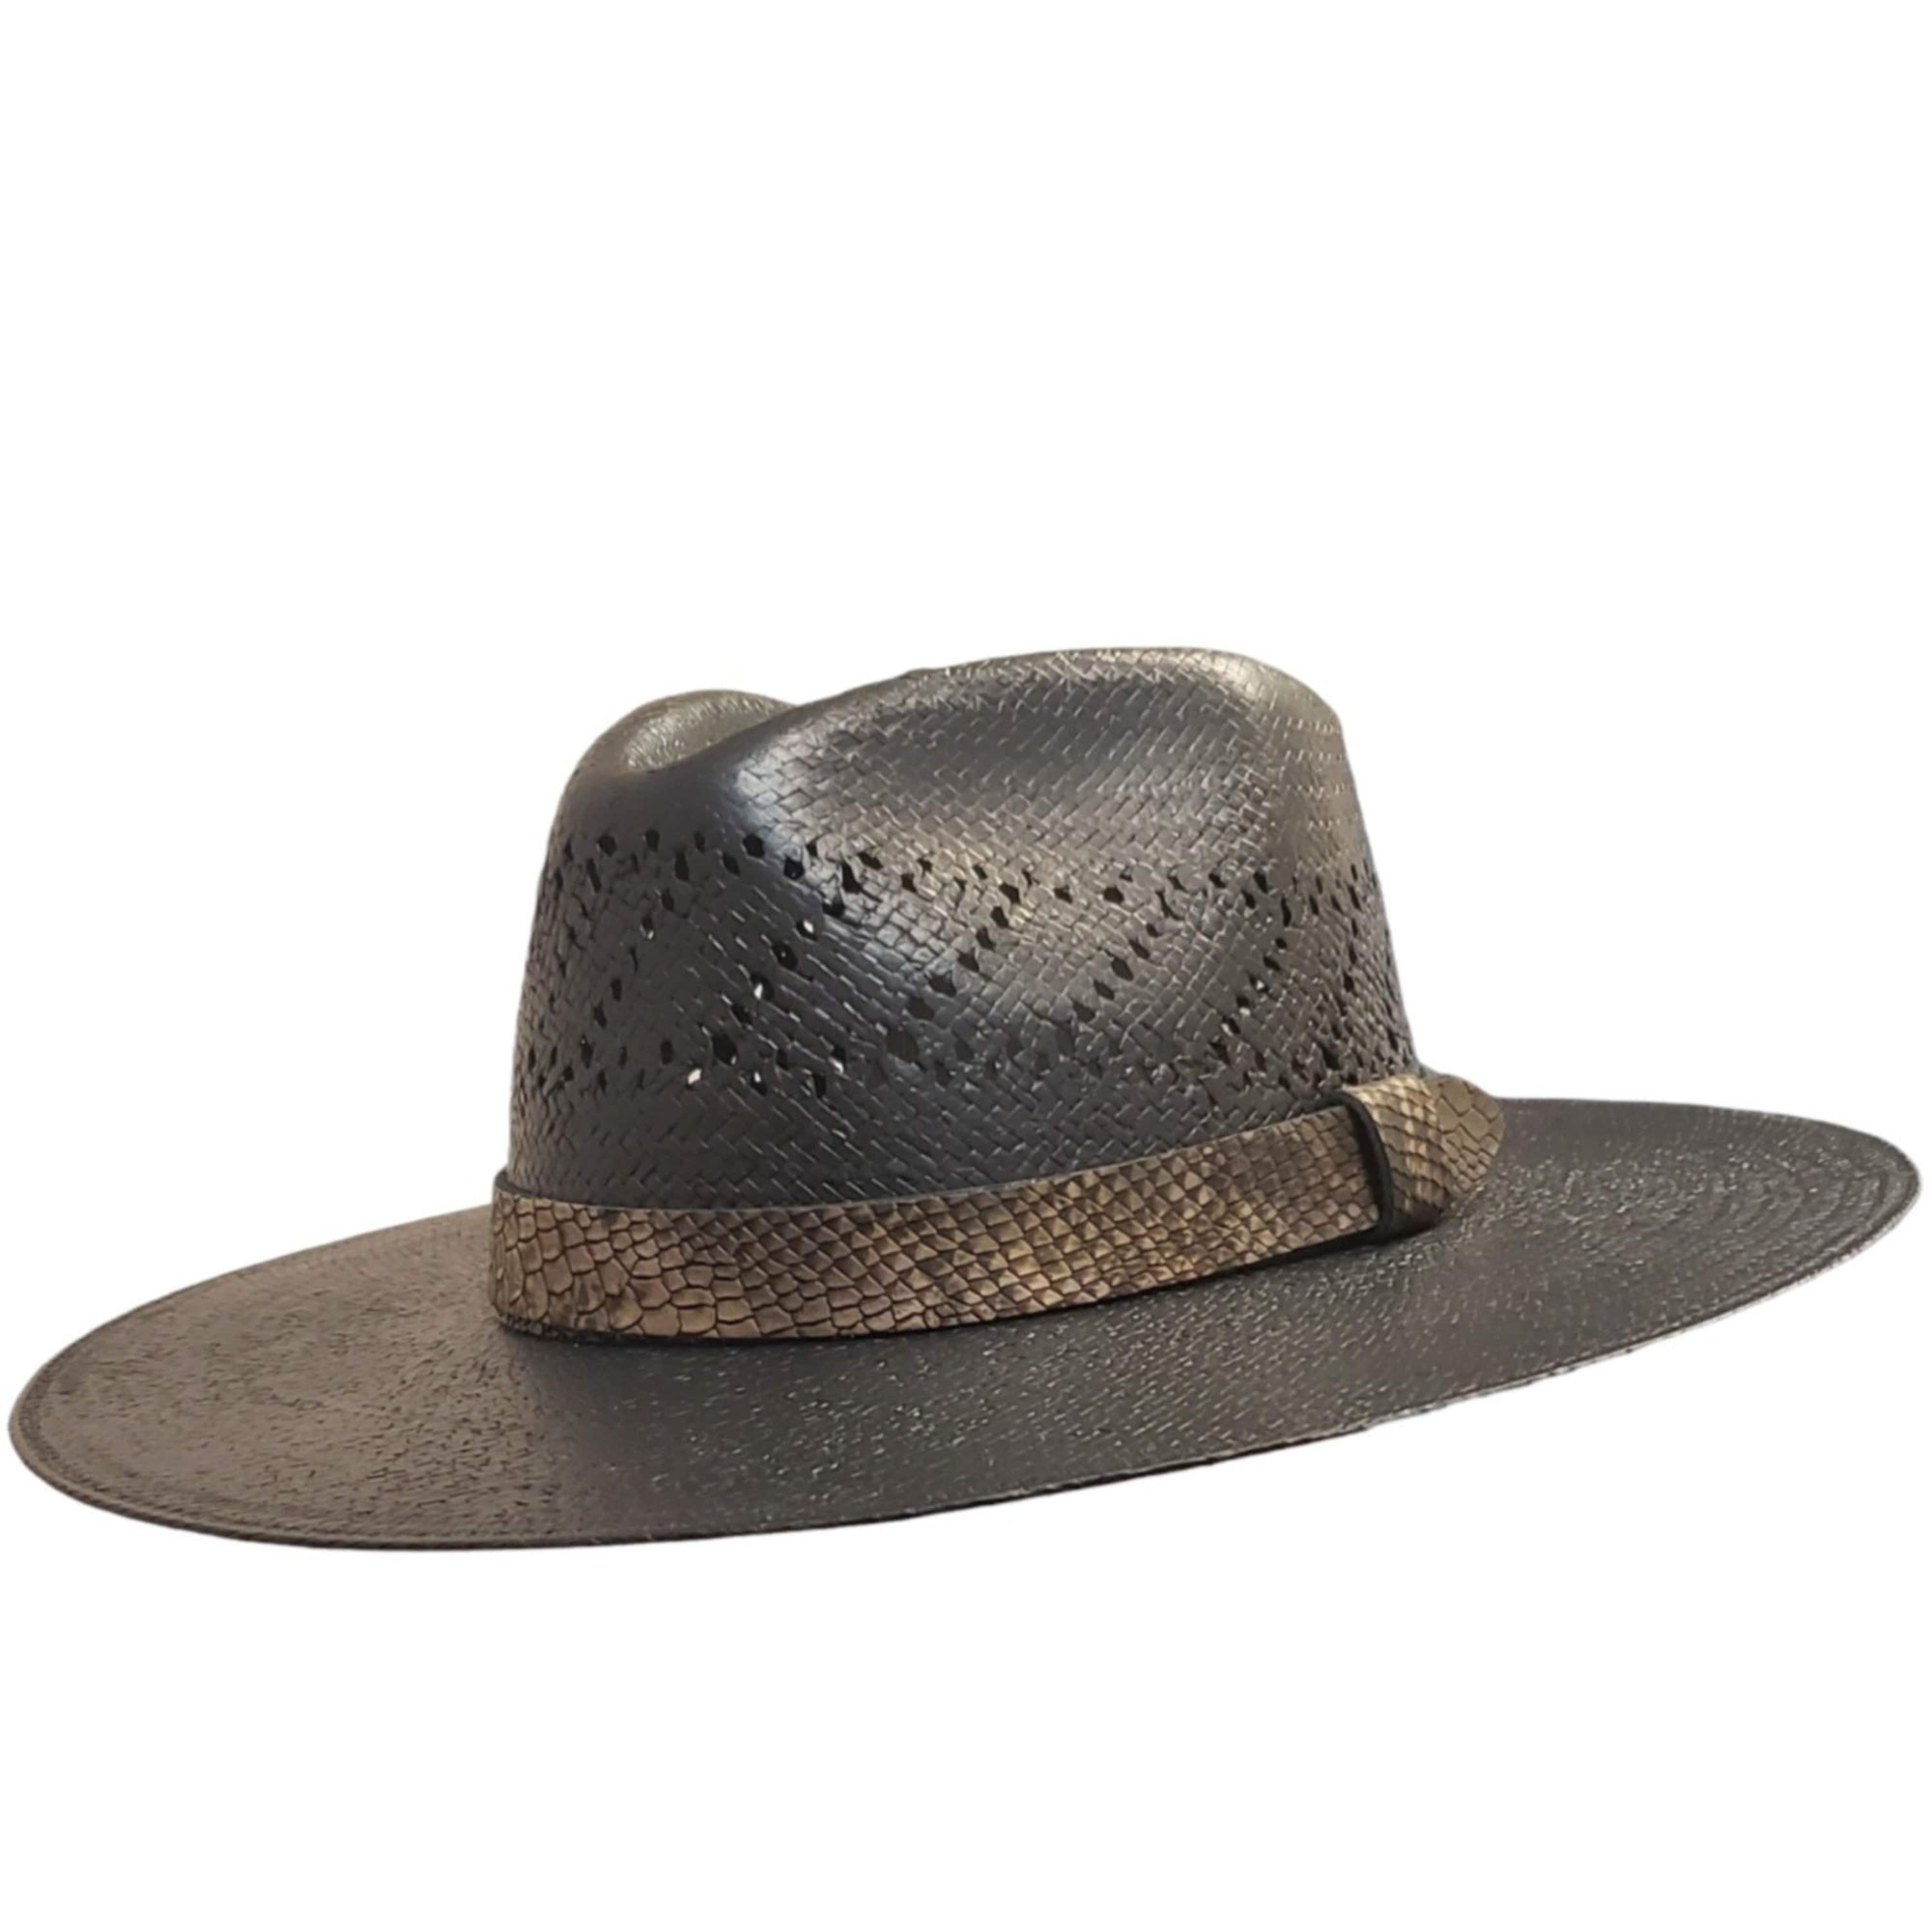 Gone Country Hats Men & Women's Hats Darkside Black - Straw Shantung